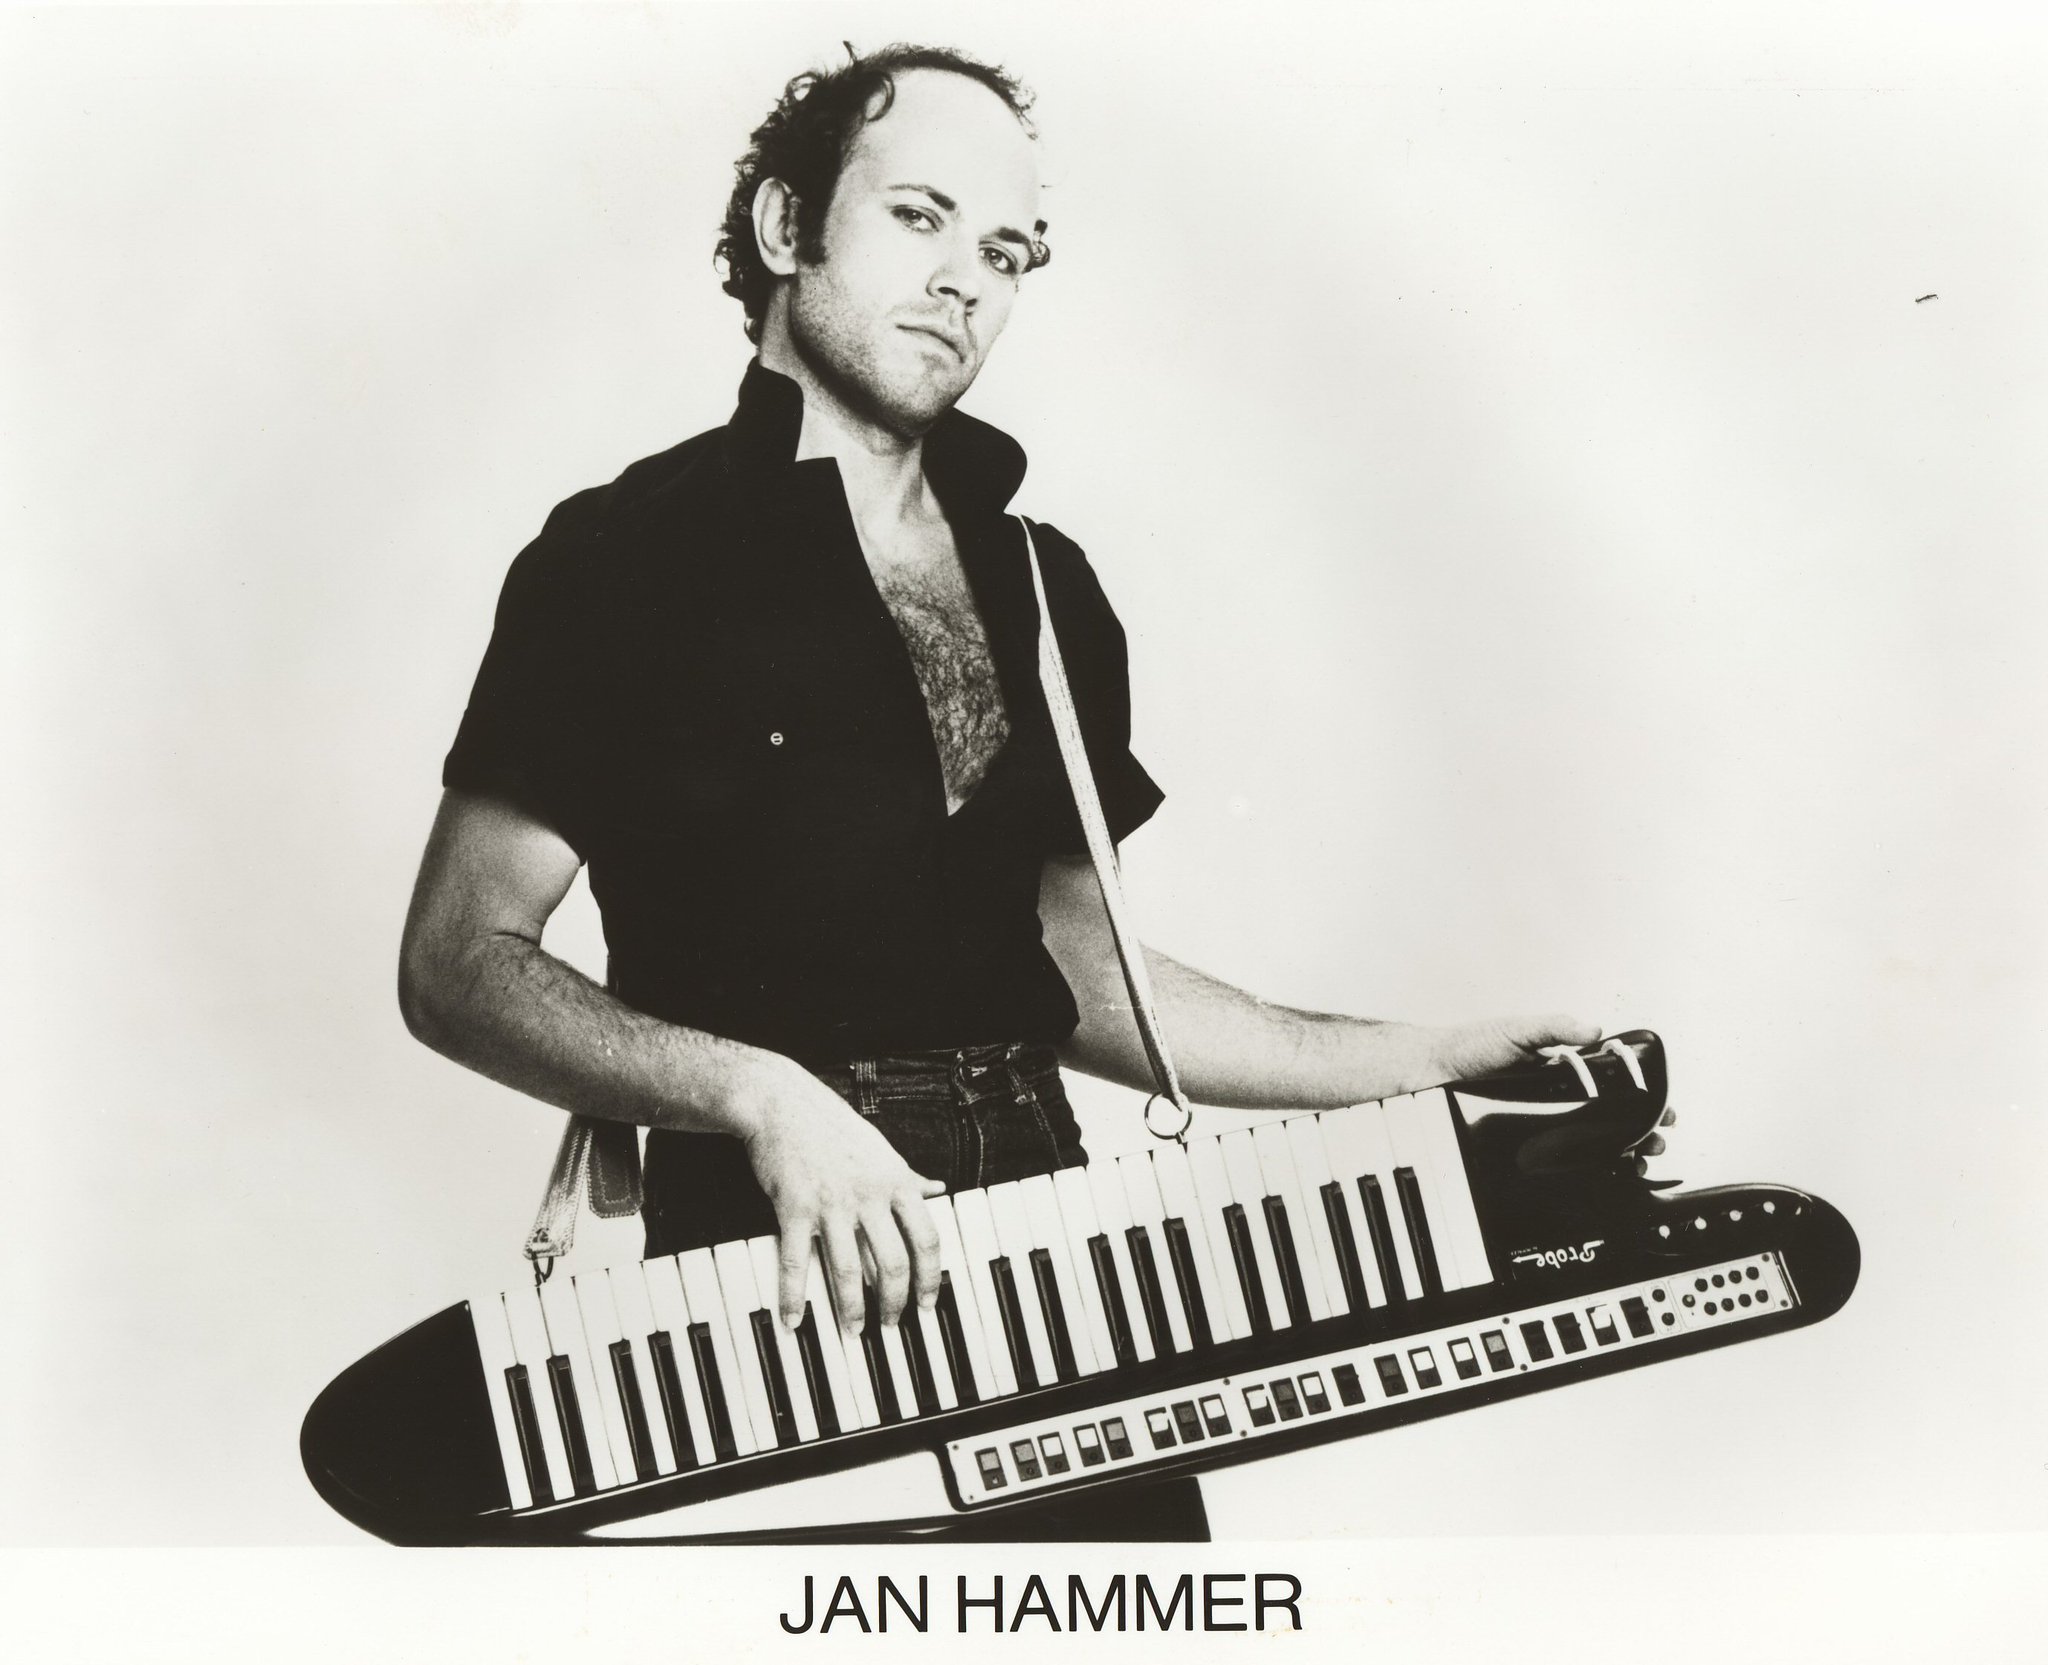 Happy 69th birthday to the original Hammer... Jan Hammer! 